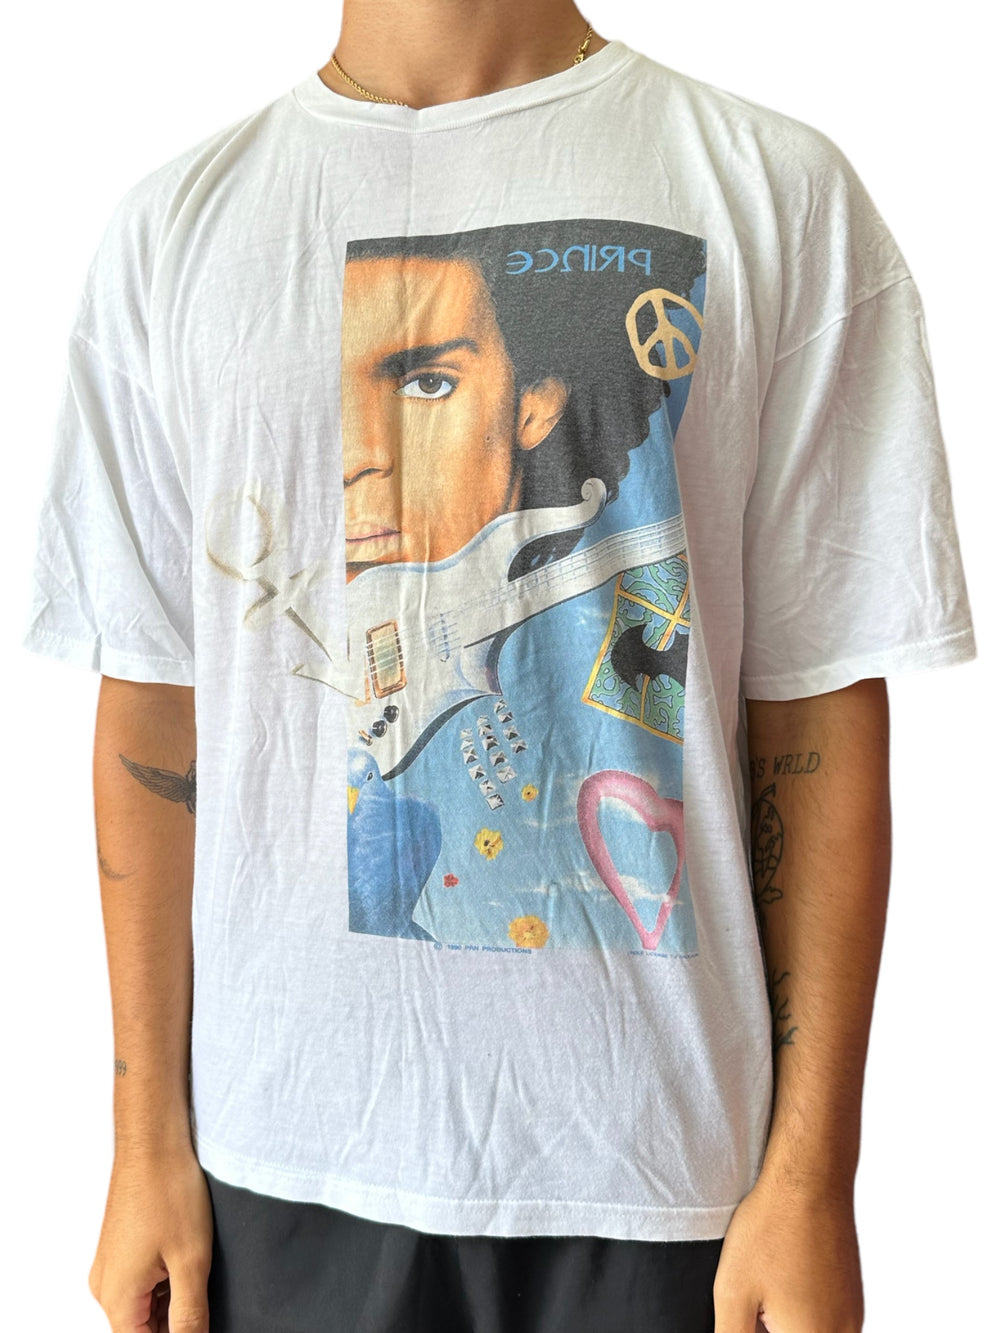 Prince – Vintage Original Tour Shirt NUDE TOUR 1990 Pre - Loved RARE